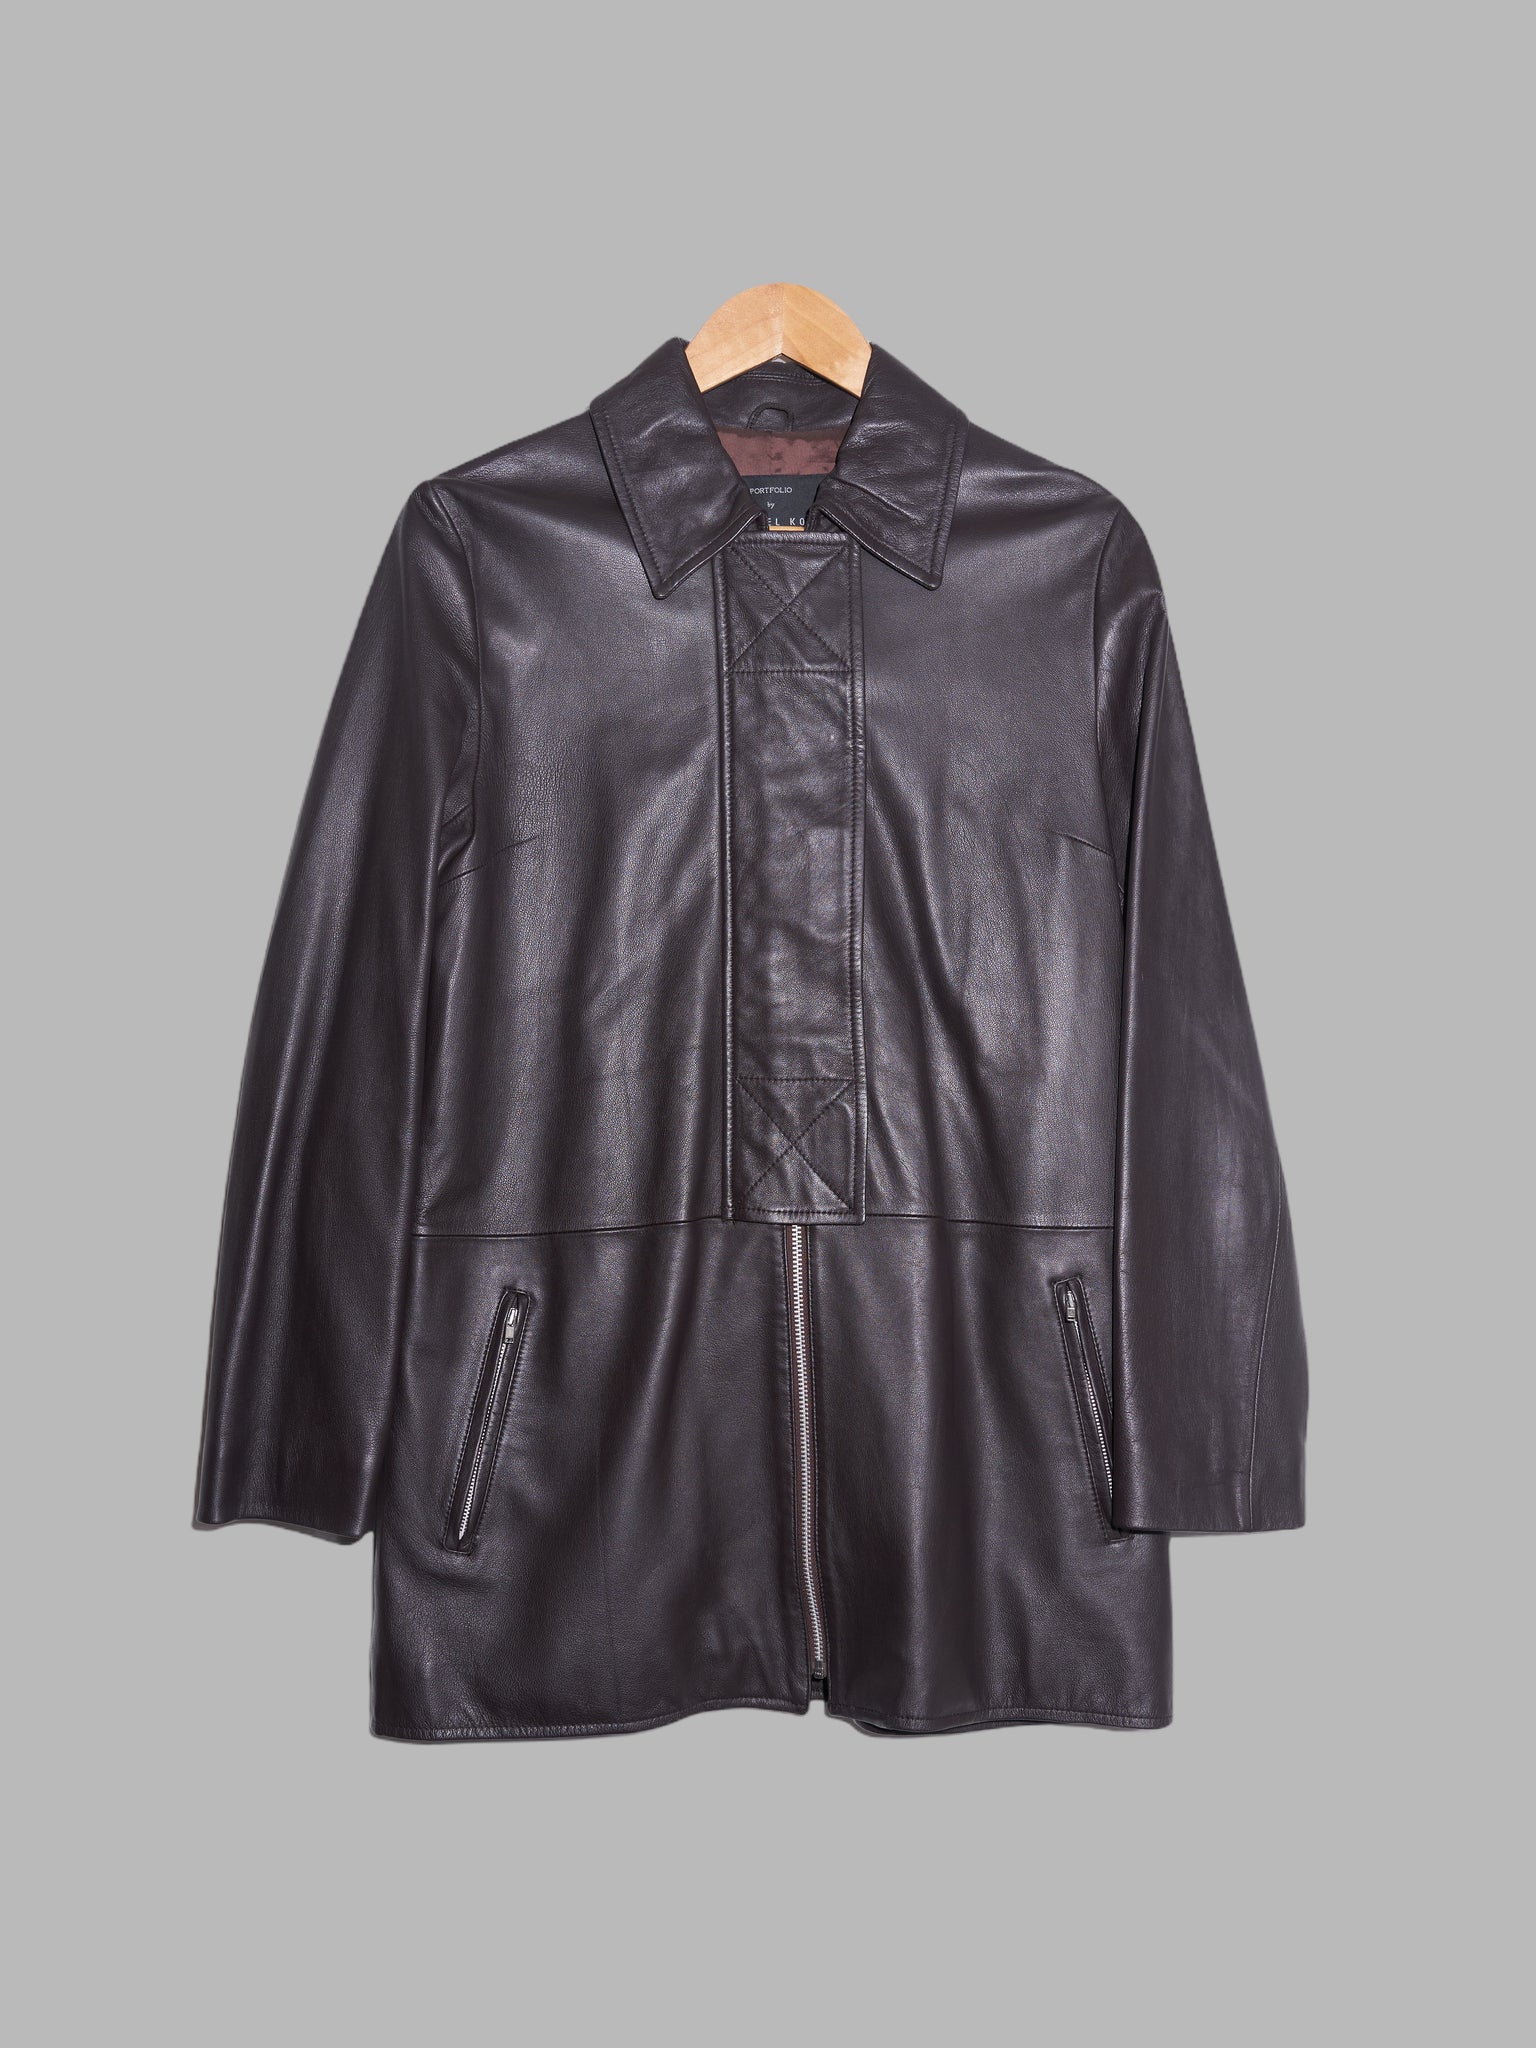 Portfolio by Michael Kors dark brown sheepskin leather zipped coat - size 40